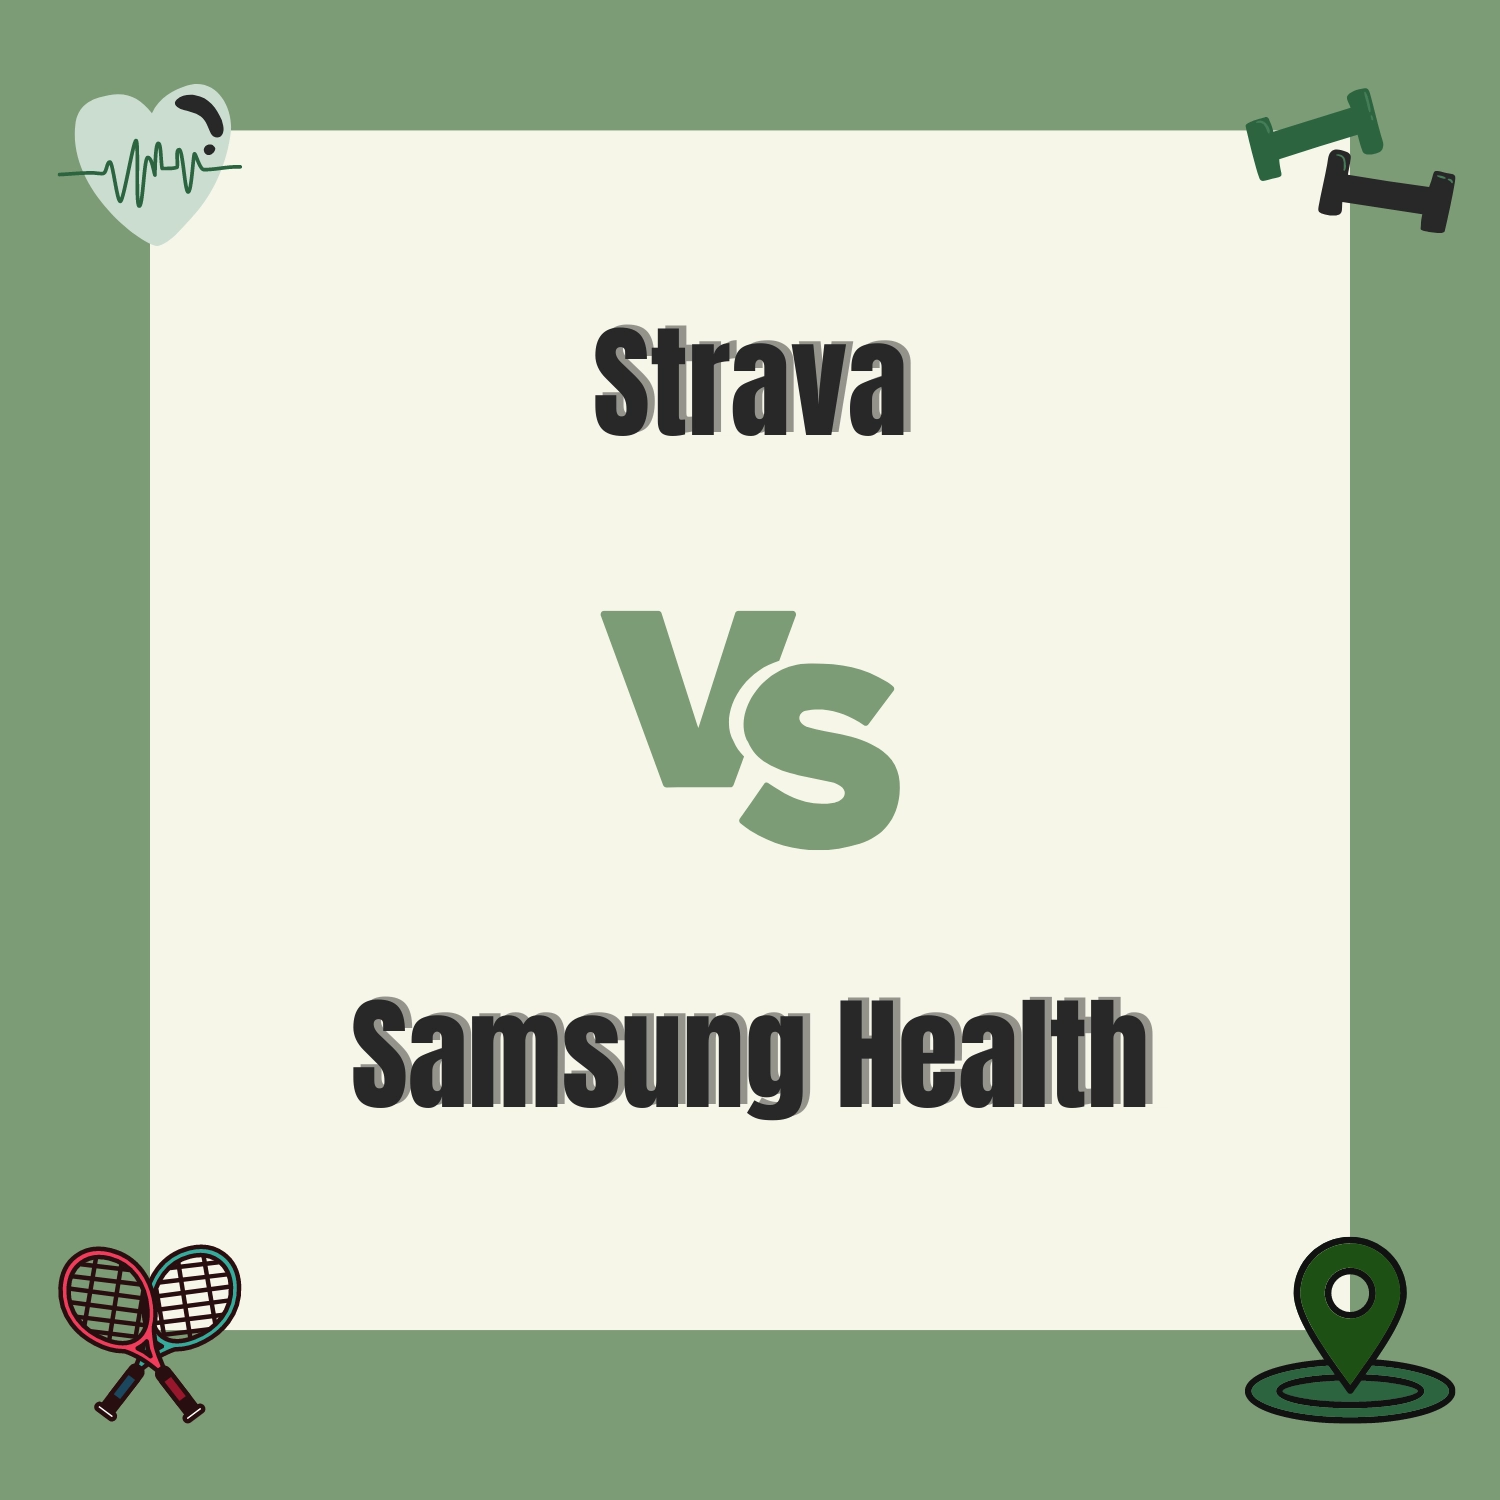 Strava vs Samsung Health